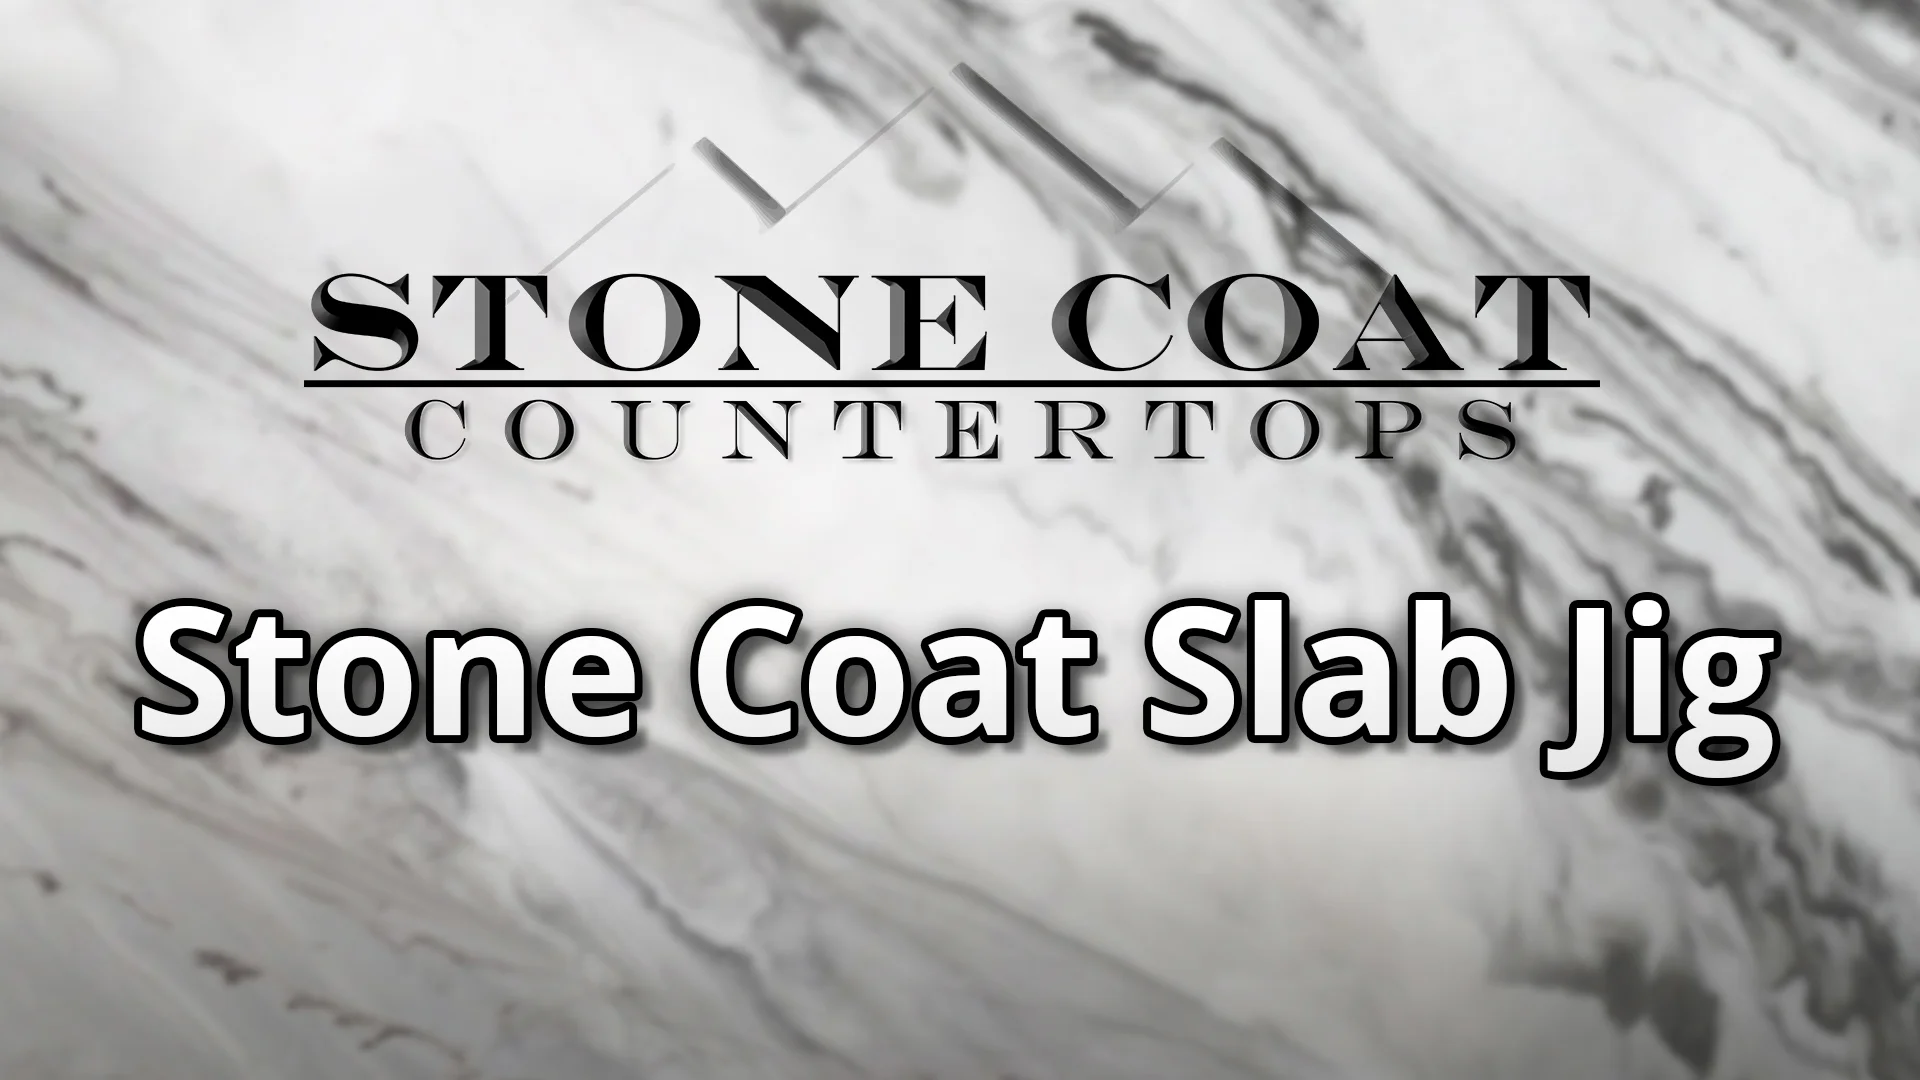 Stone Coat Countertop's Insiders